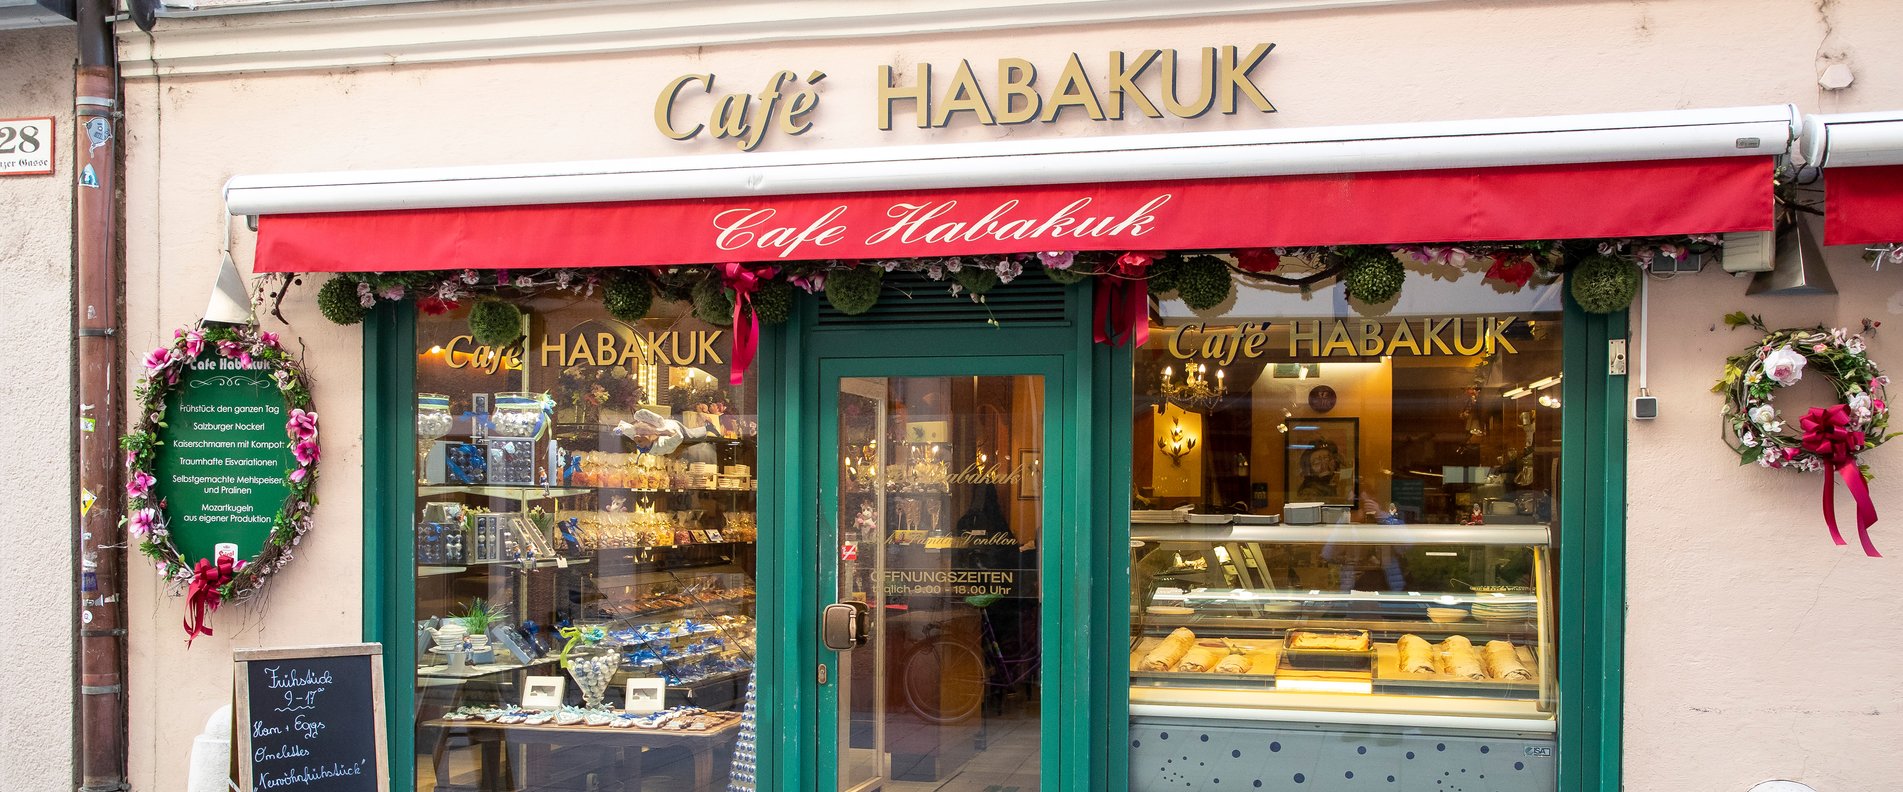 Cafe Habakuk | © Andreas Kolarik